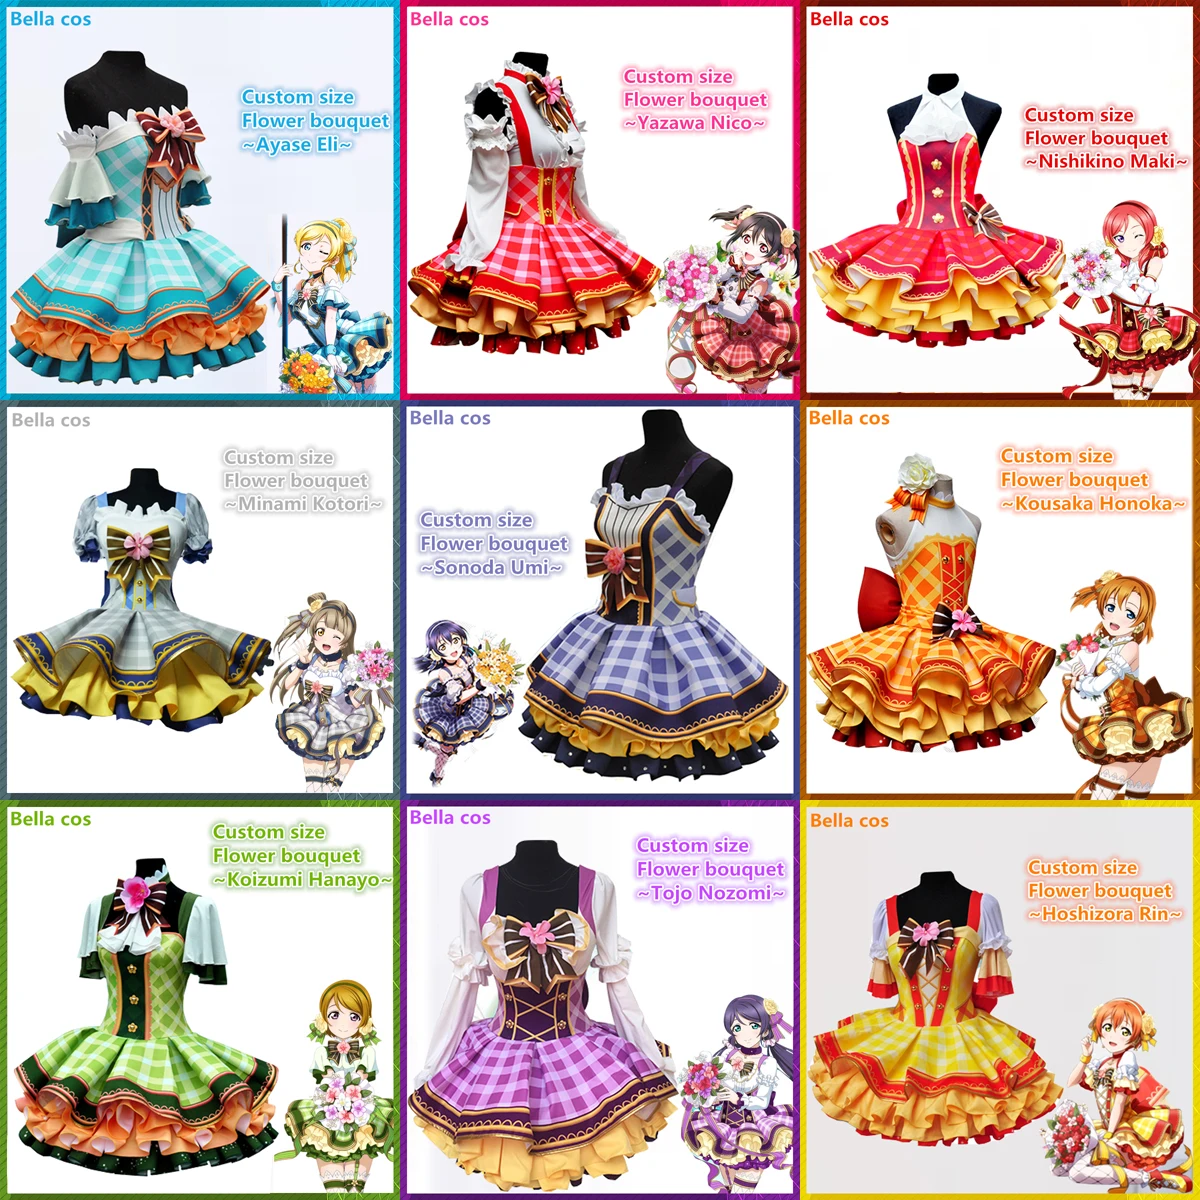 

Custom Size LoveLive Flower Bouquet Cosplay Costume MakiL/Eli/Umi/Tojo/Nico/Rin/Kotori/Hanayo Cos Dress Women Anime Outfits Suit